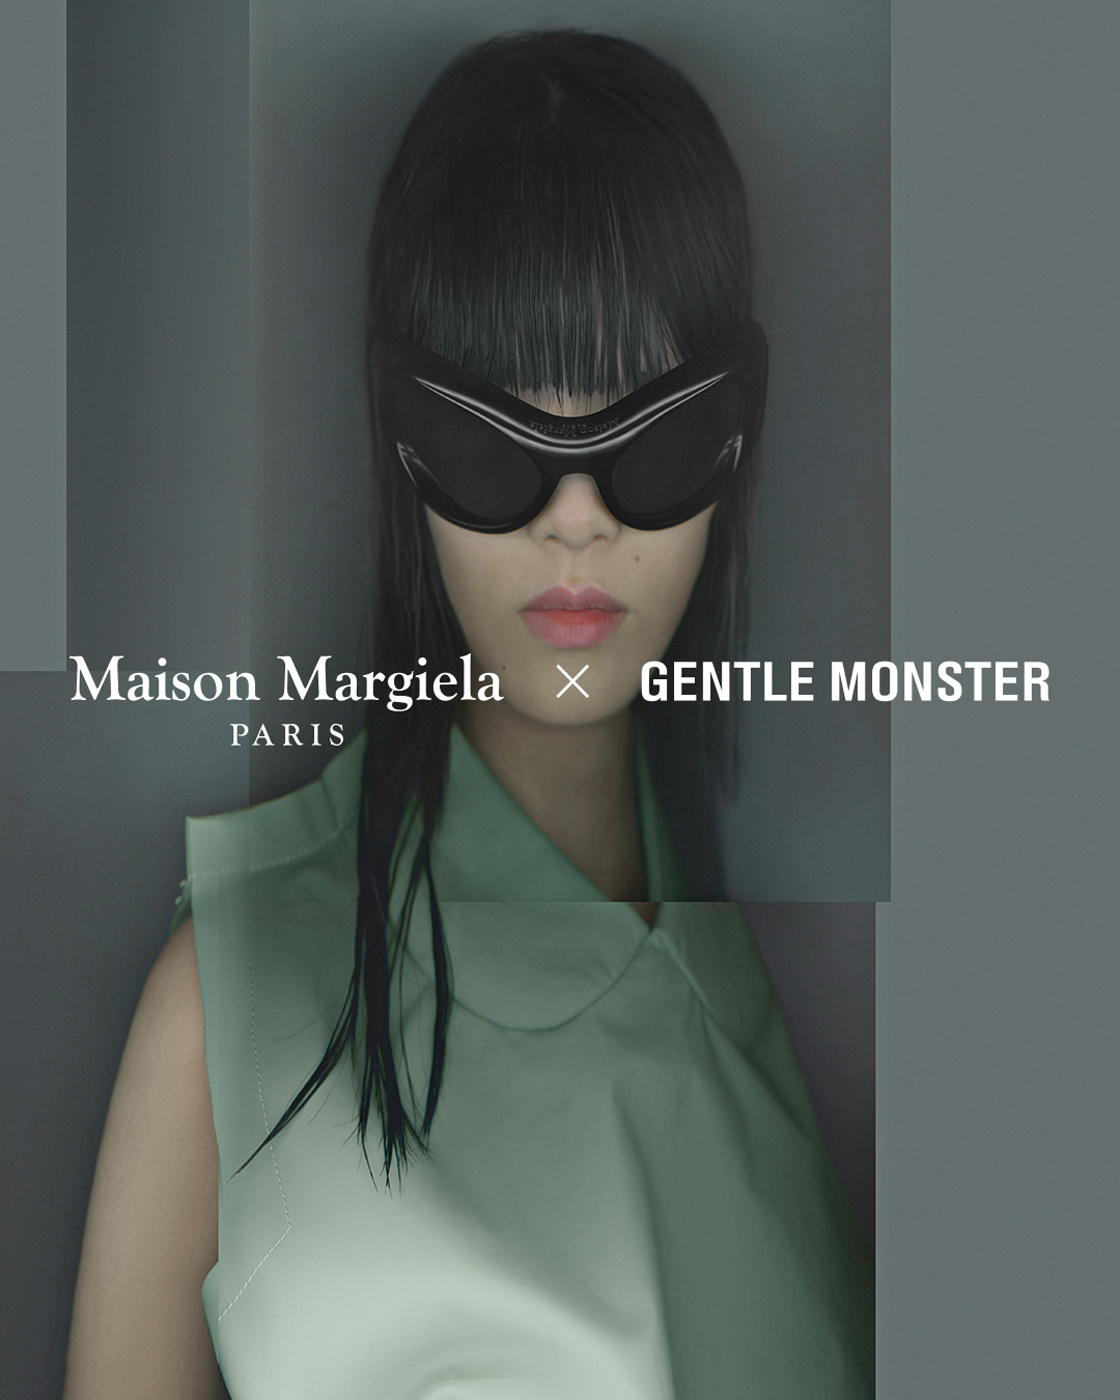 Maison Margiela & Gentle Monster Drop 11 Wild Sunglasses